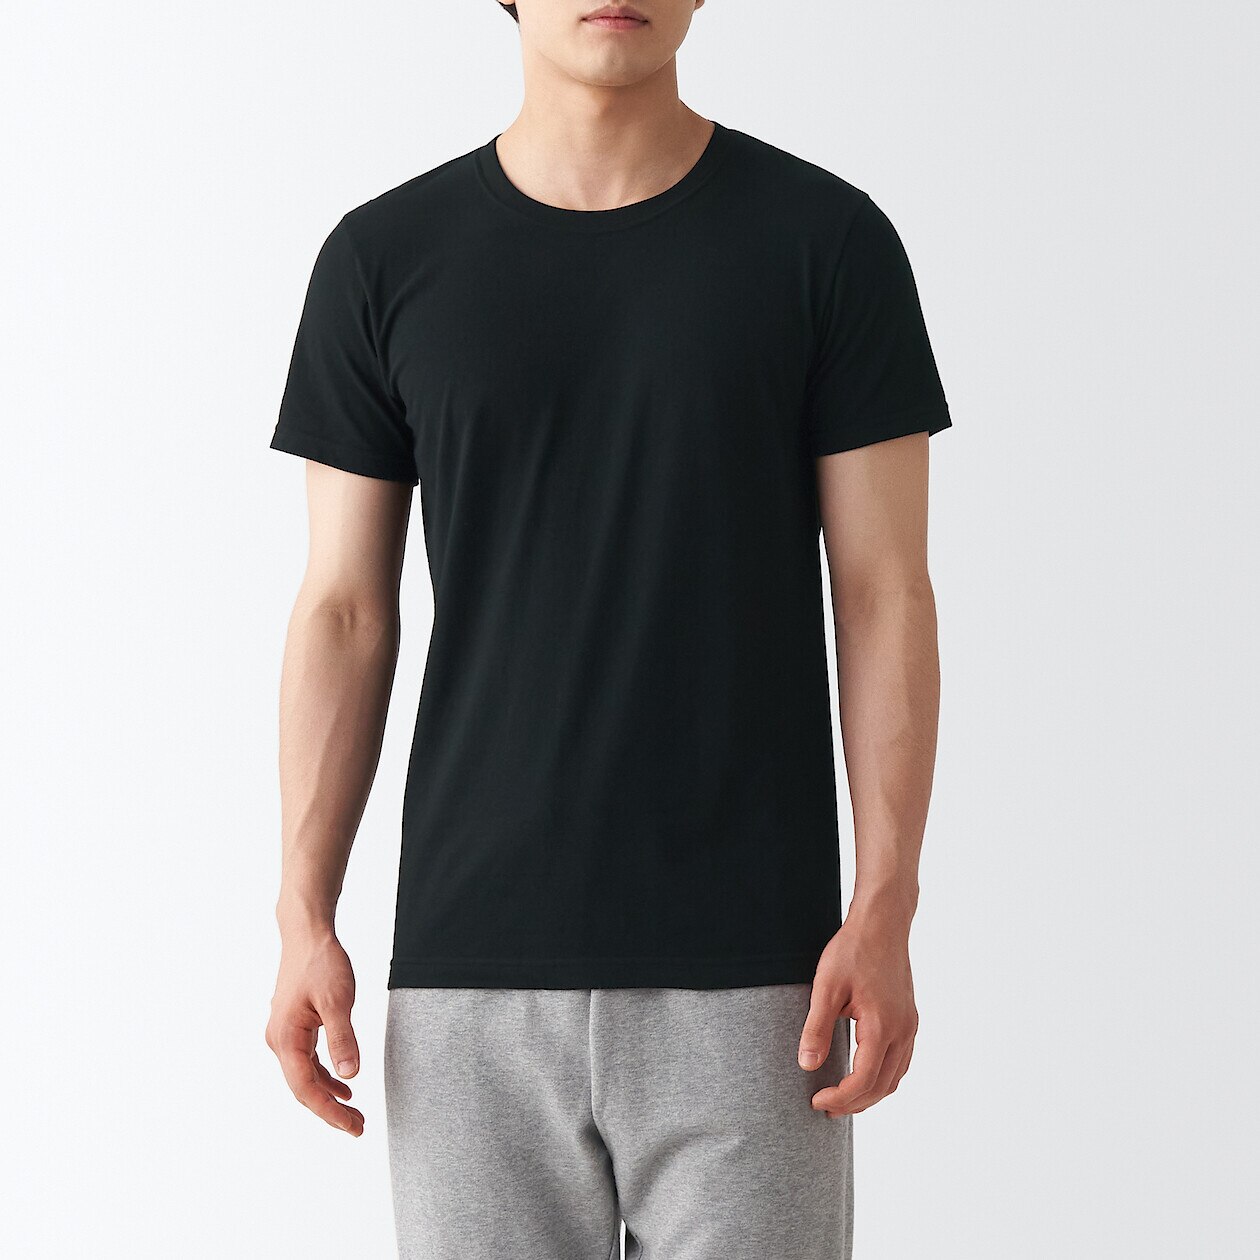 Men's Thin Cotton Crew Neck Short Sleeve T-shirt